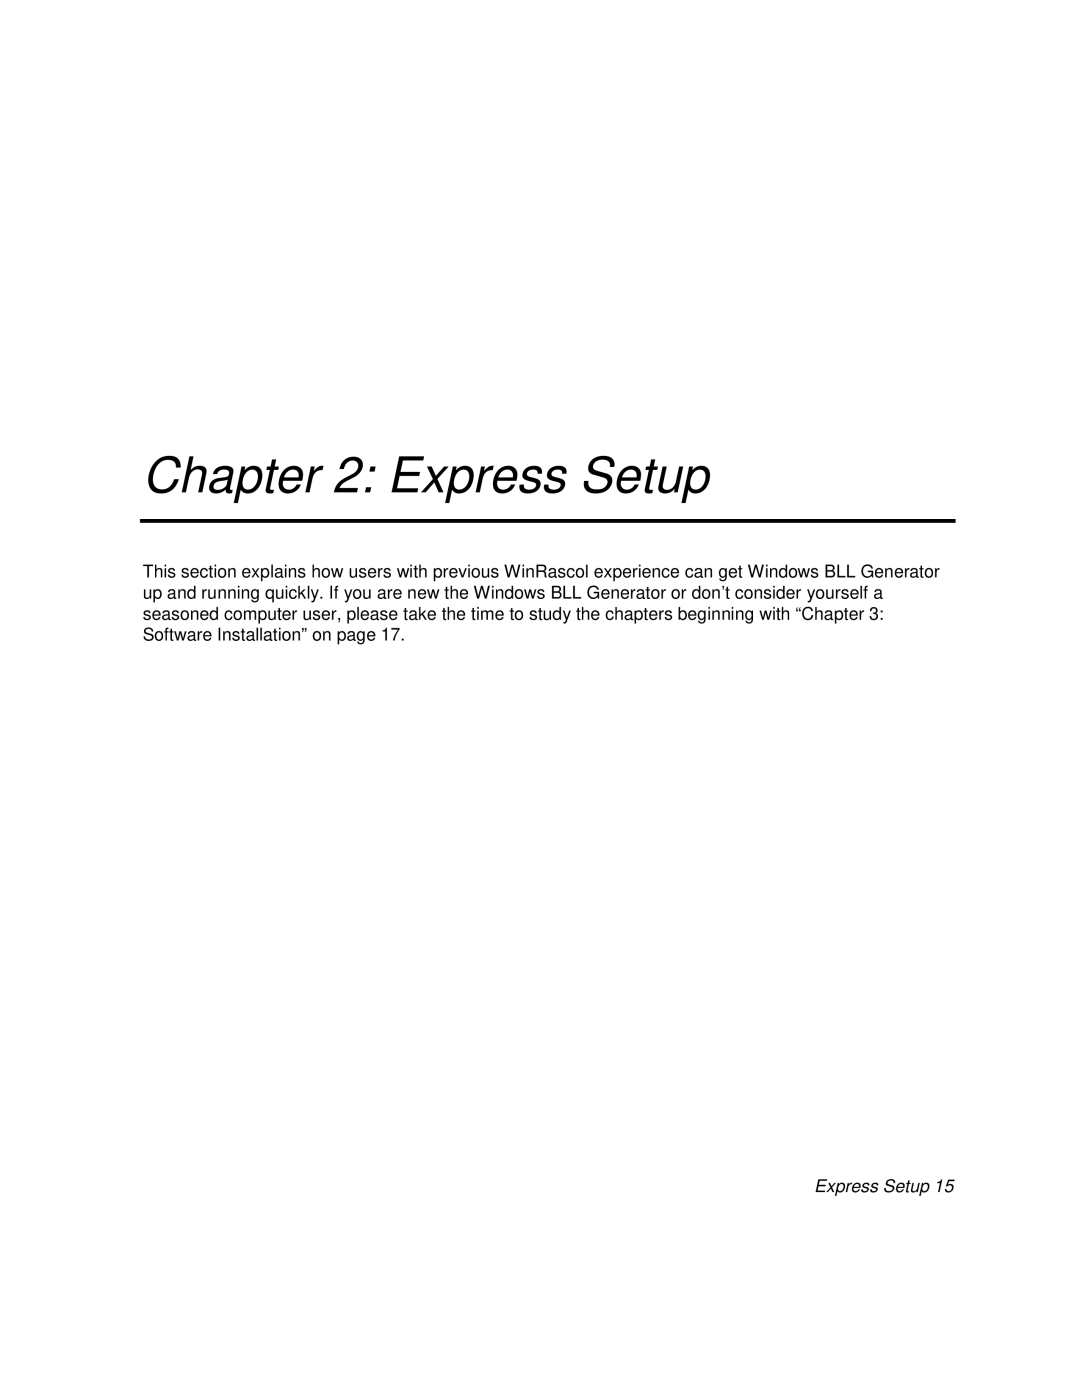 Polaroid BLL Generator manual Express Setup 